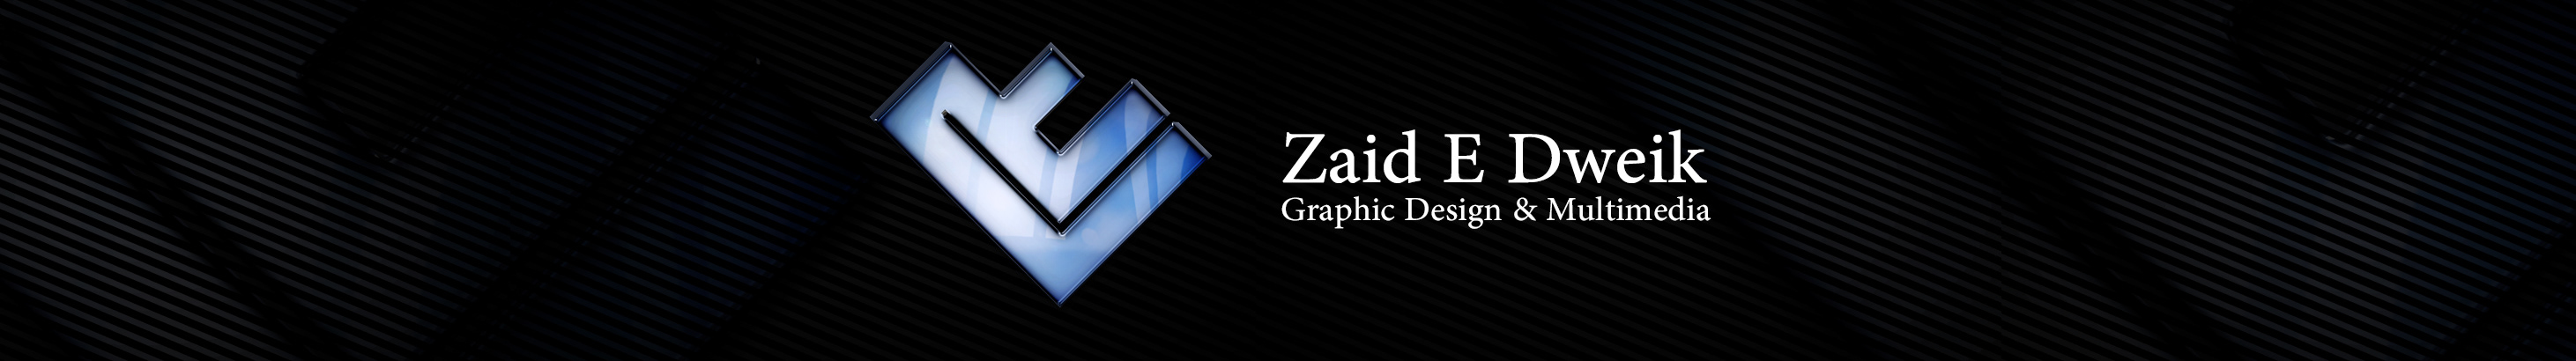 Zaid Emad Dweik's profile banner